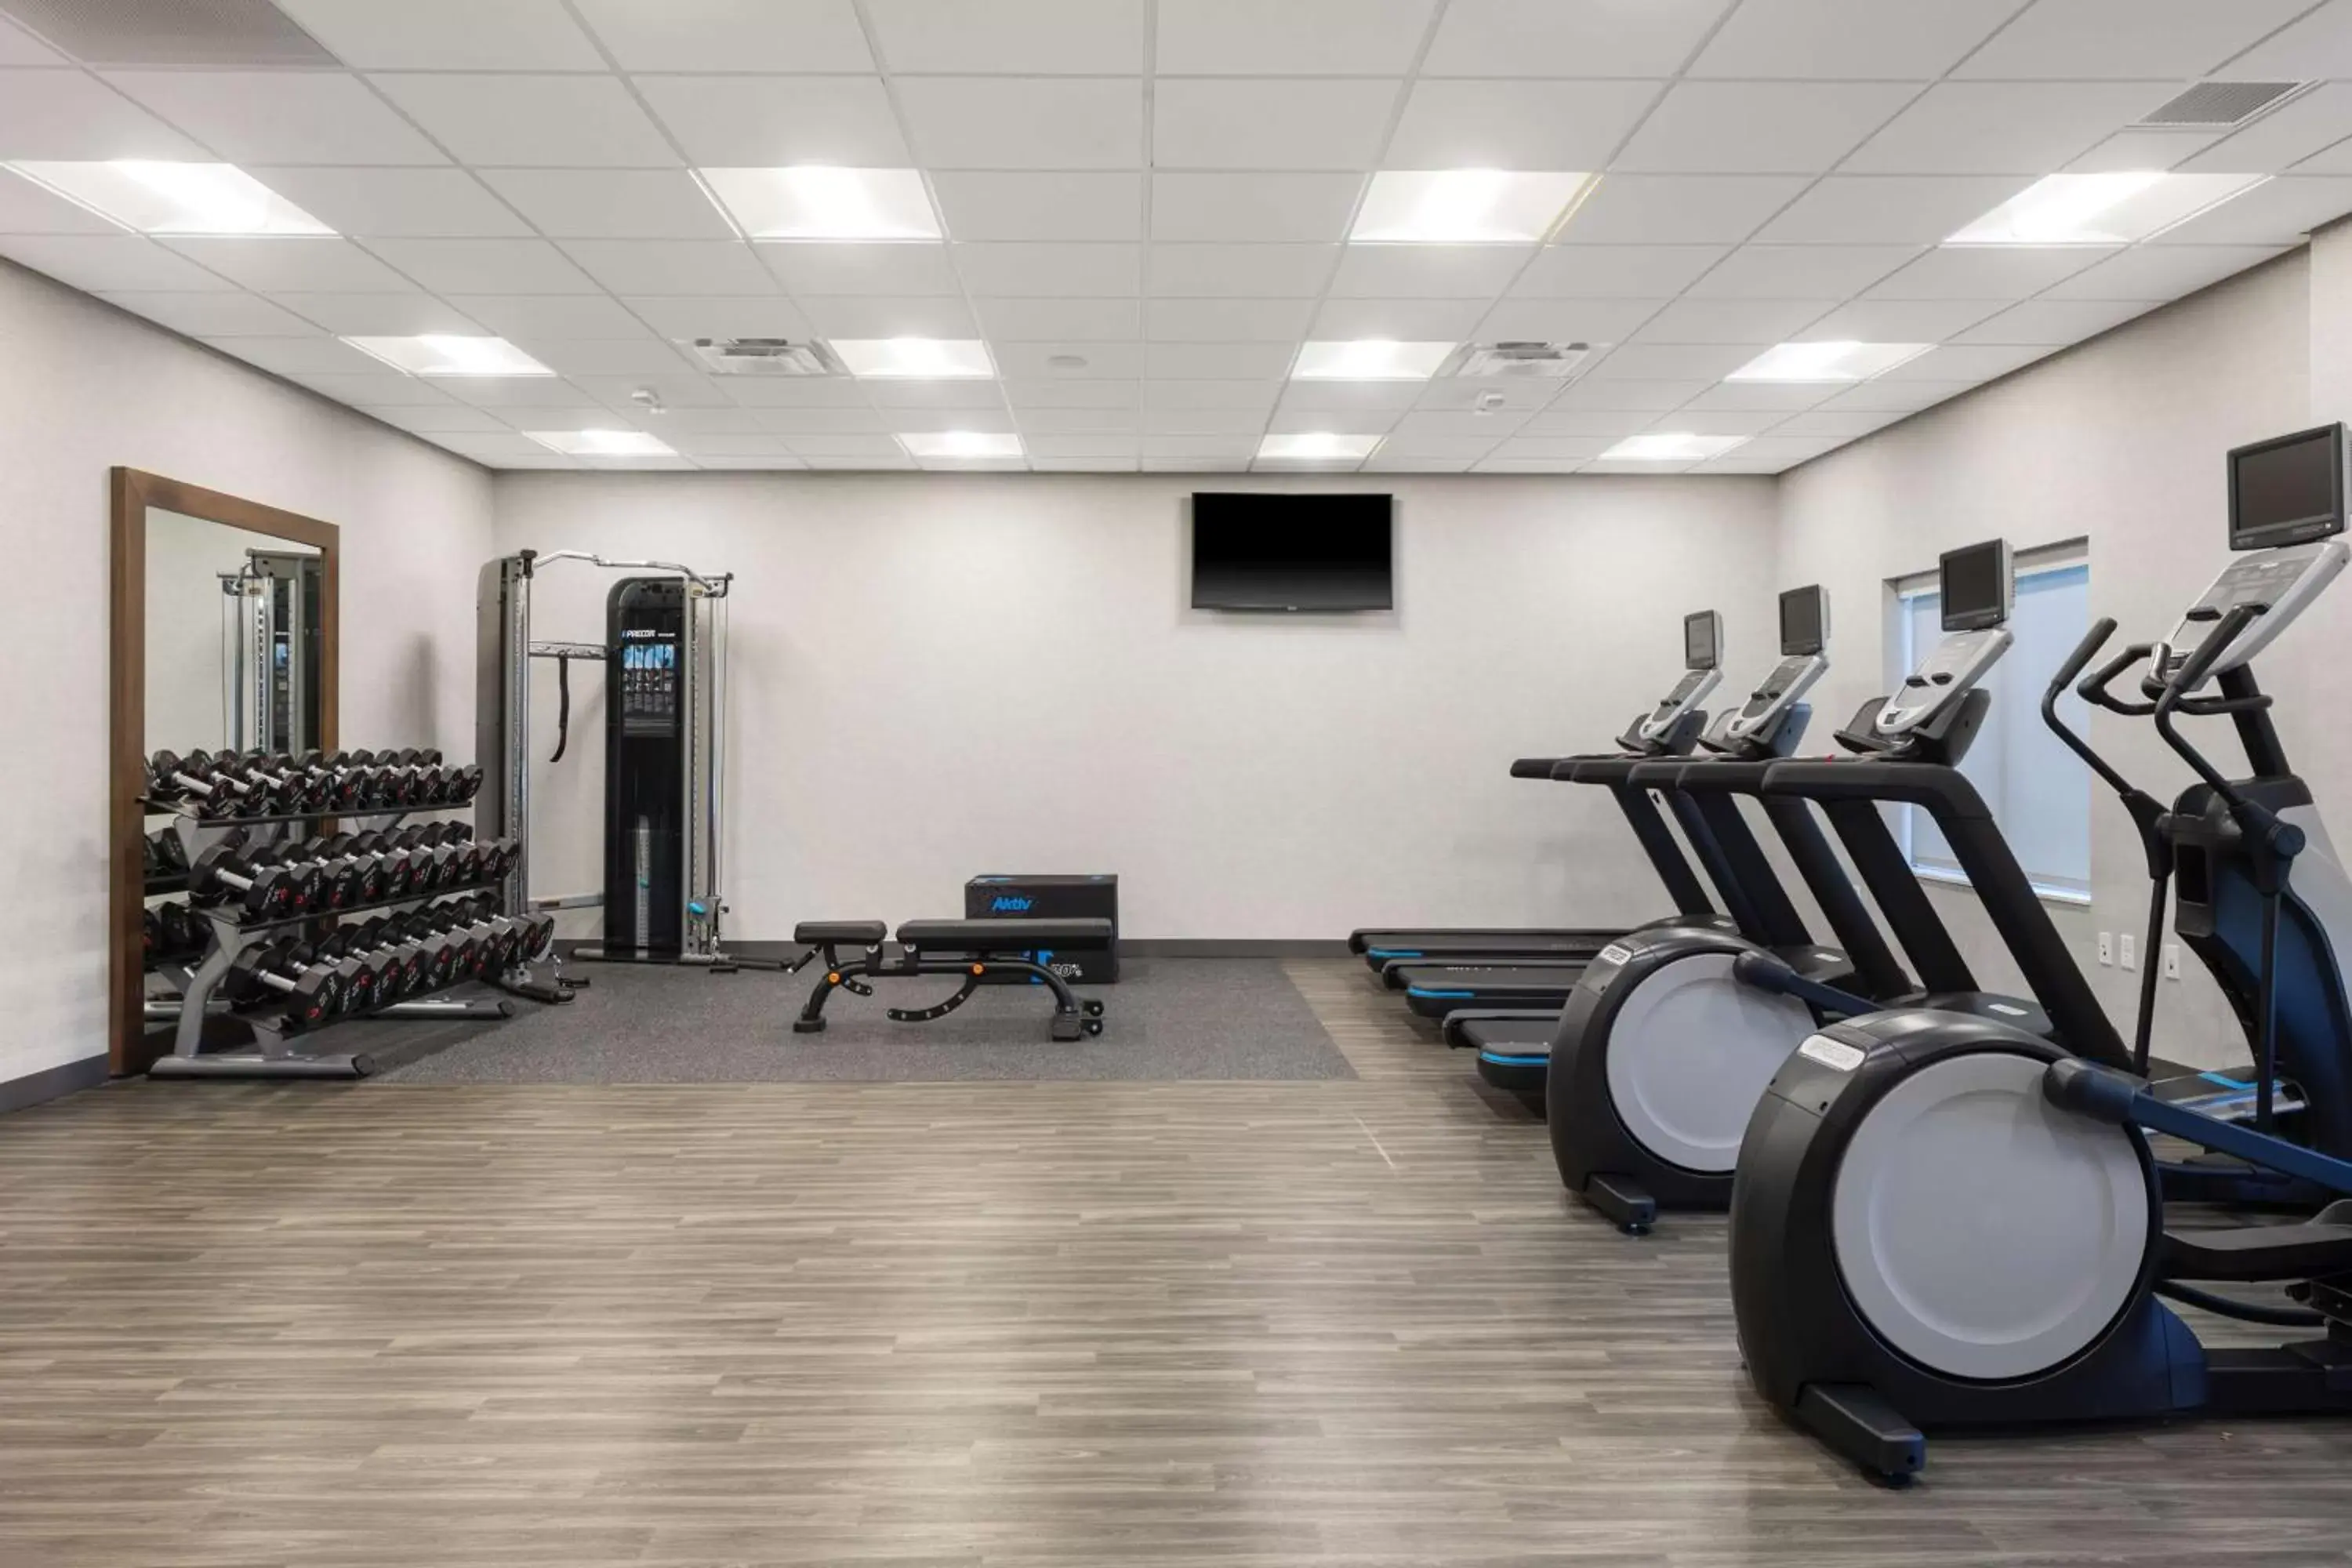 Fitness centre/facilities, Fitness Center/Facilities in Hampton Inn Circleville, Oh